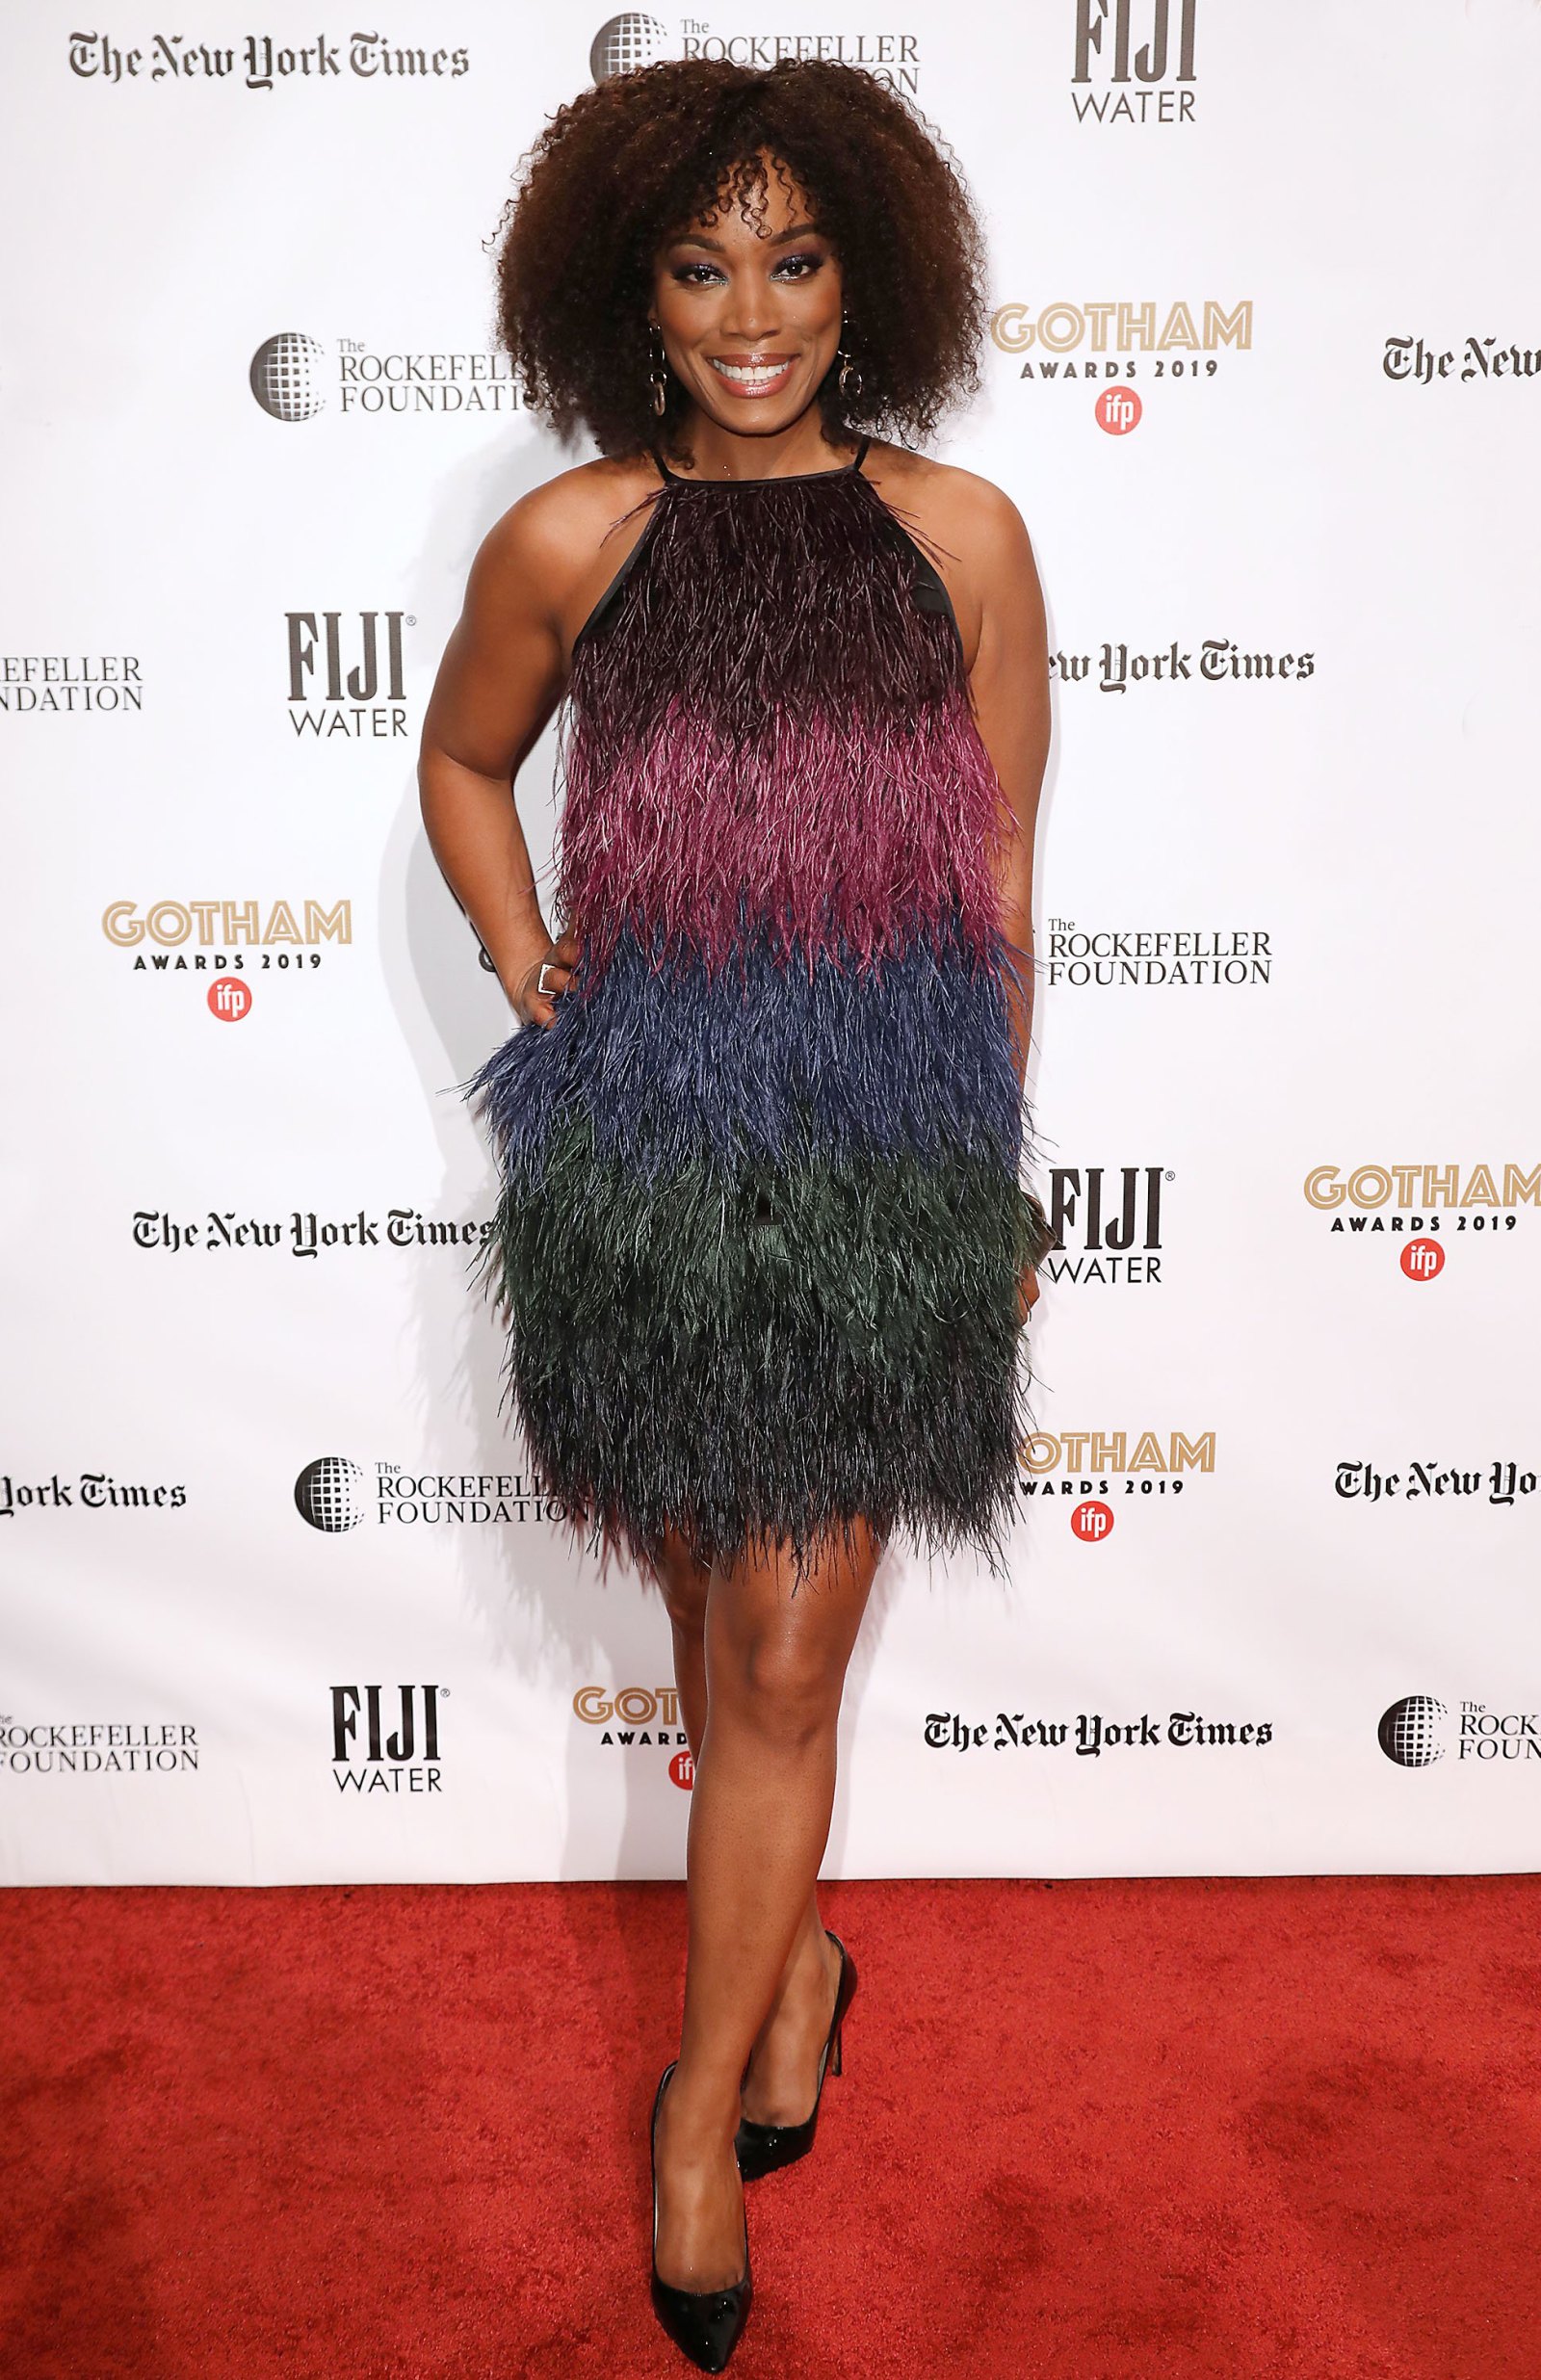 Gotham Film Awards 2019: Best Red Carpet Fashion, Dresses